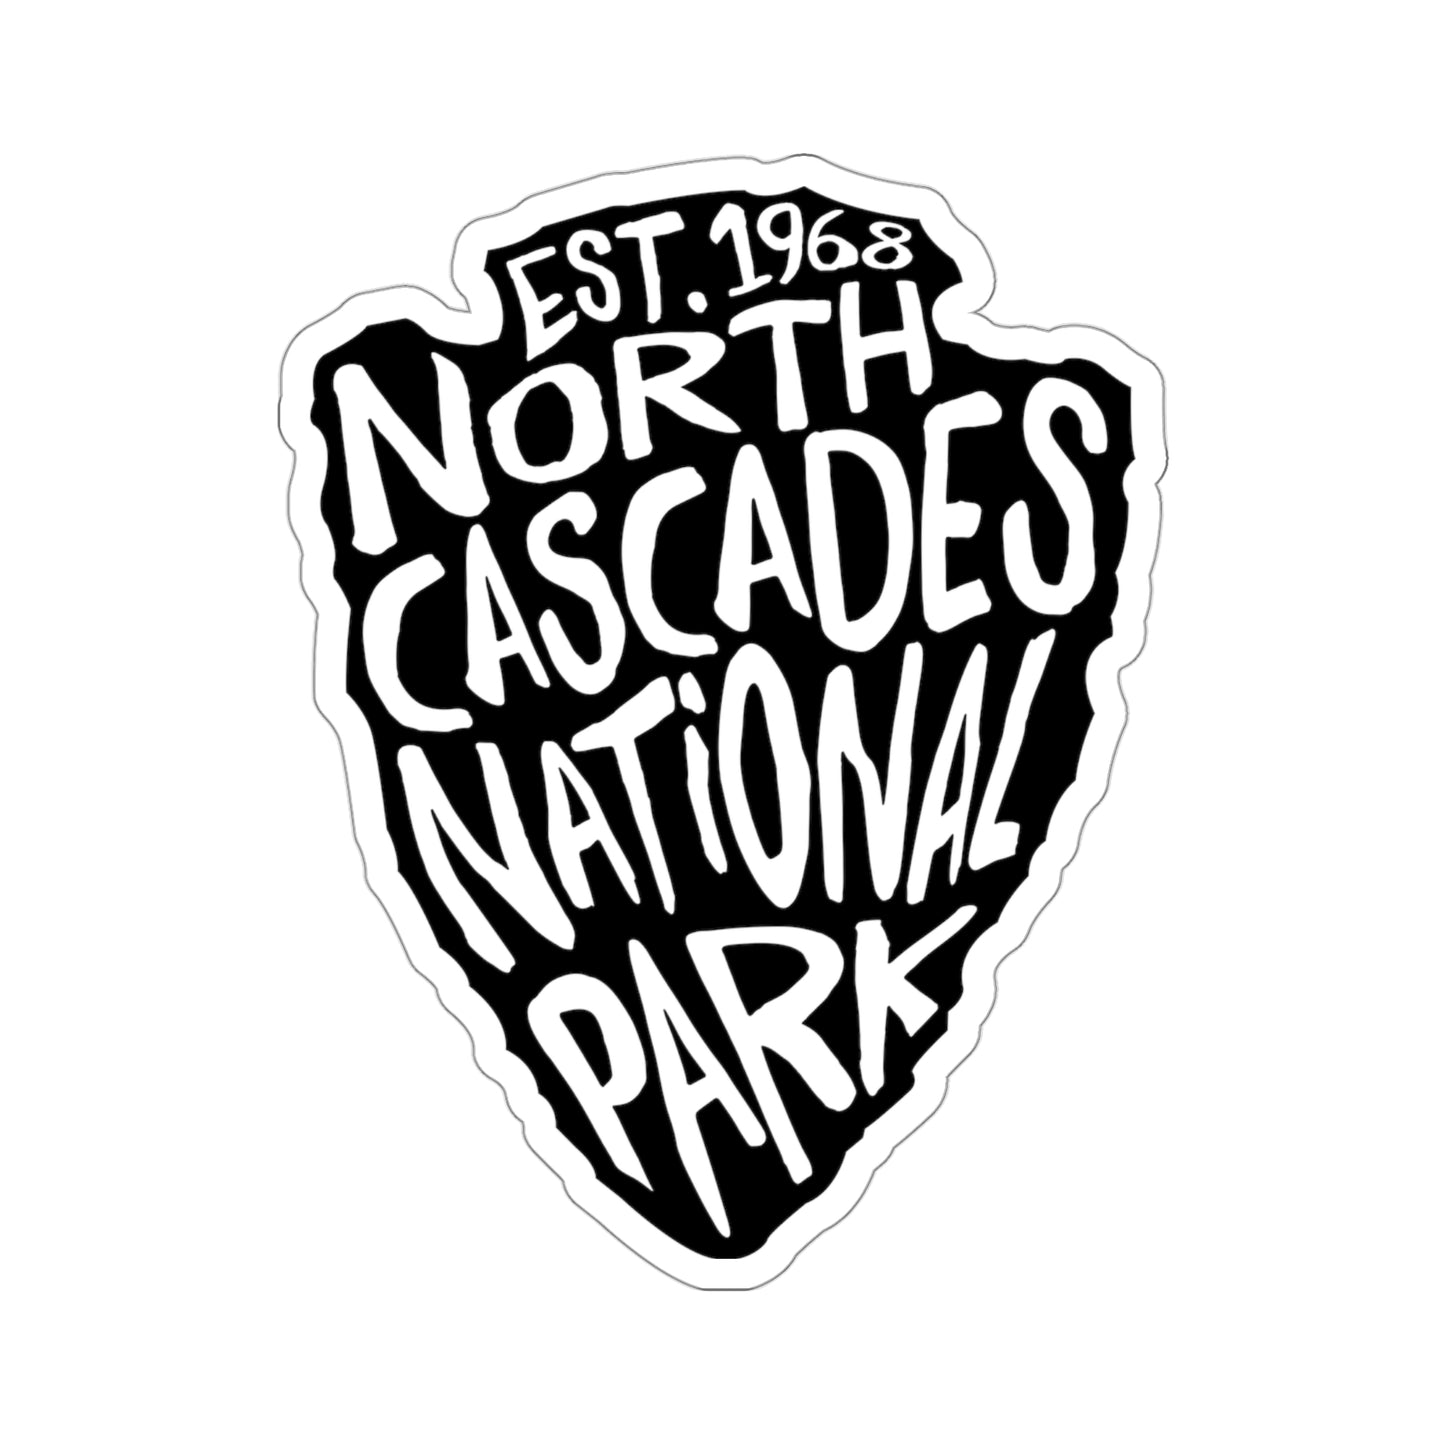 North Cascades National Park Sticker - Arrow Head Design